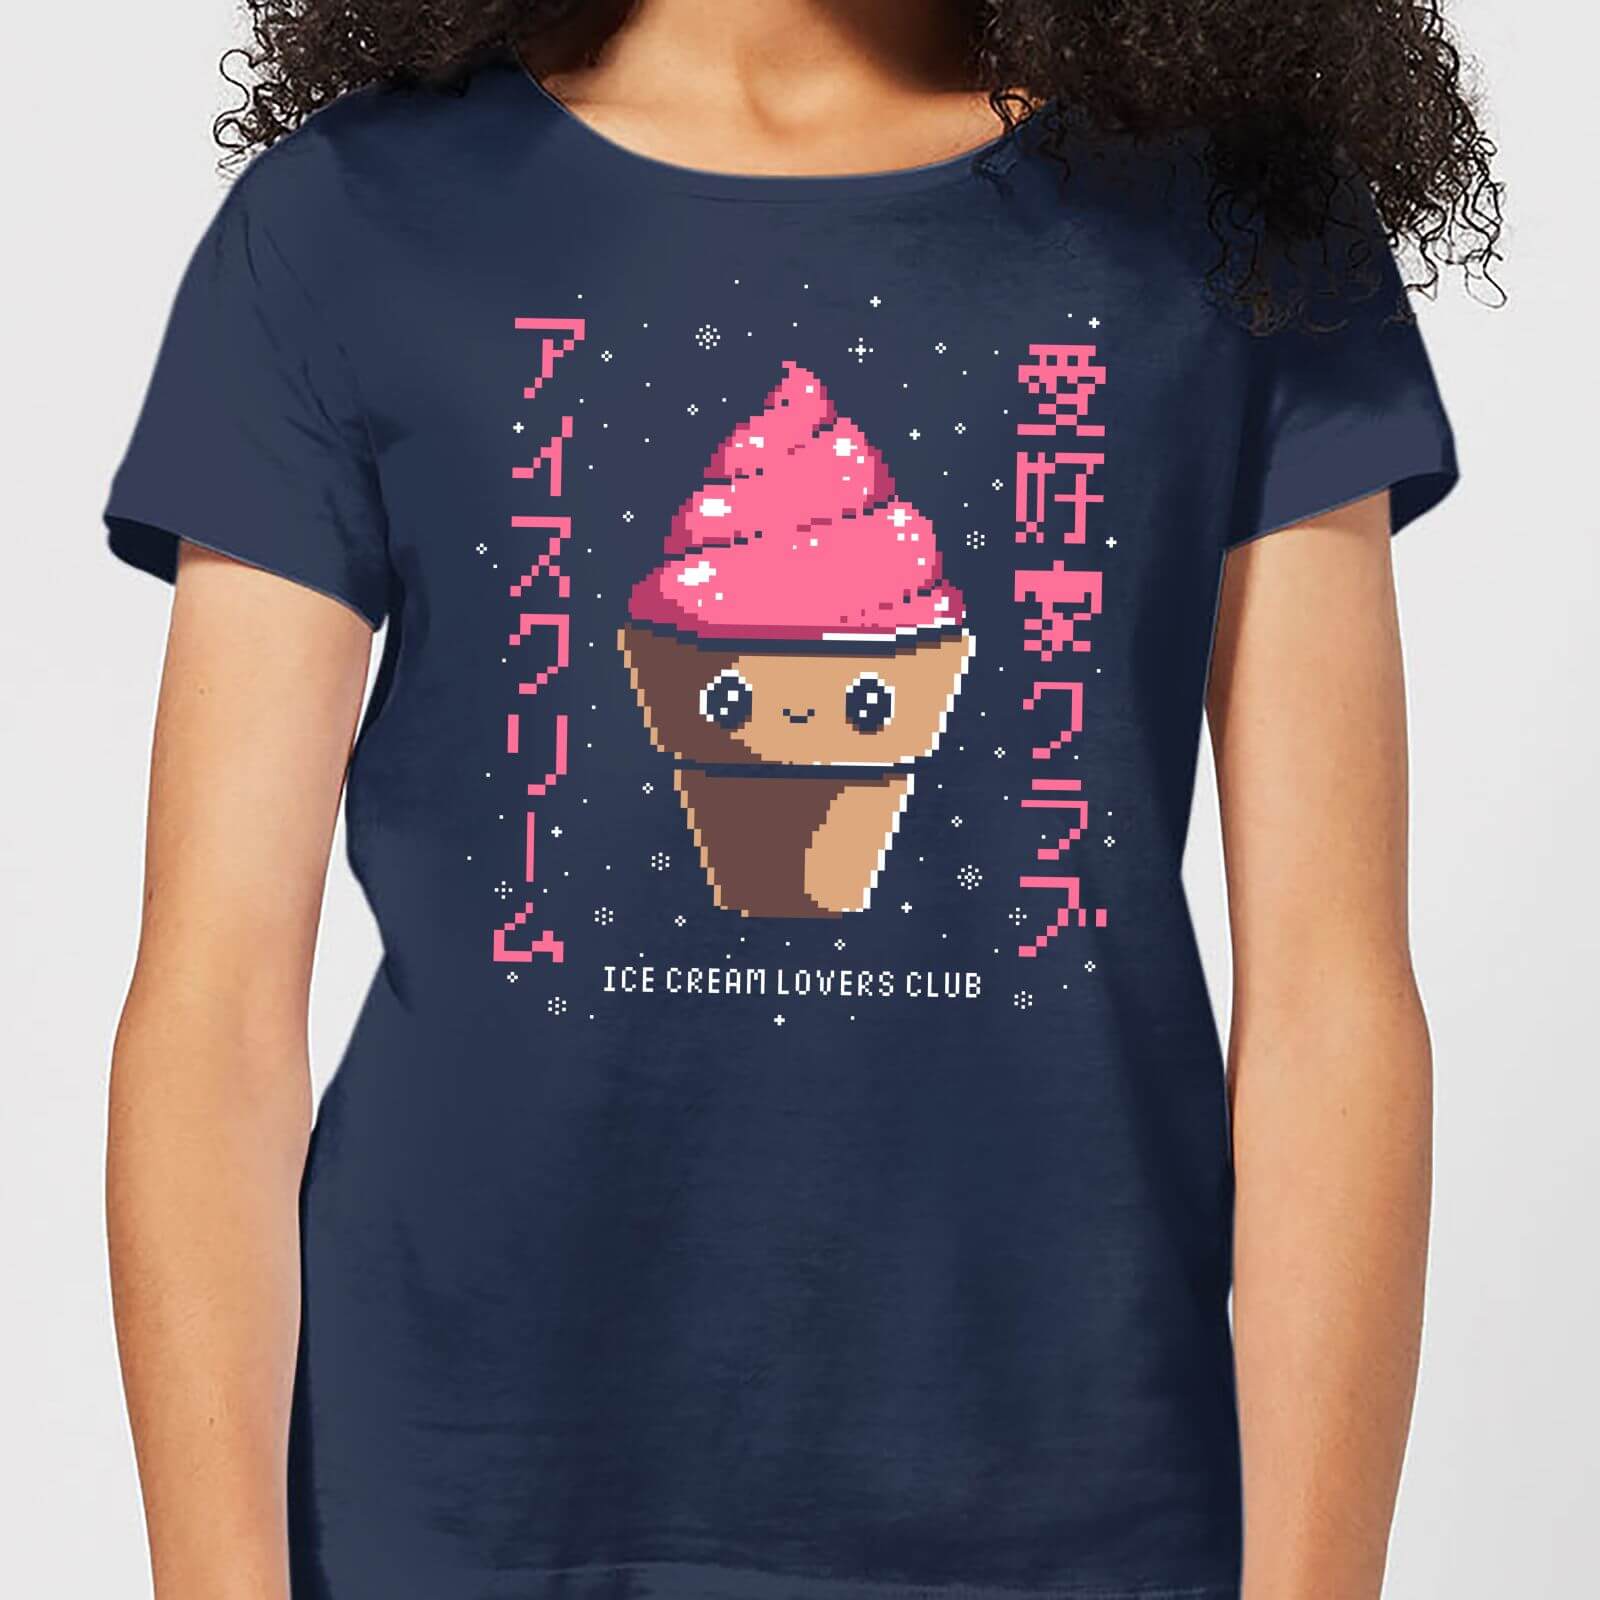 Ilustrata Ice Cream Lovers Club Women's T-Shirt - Navy - S - Navy